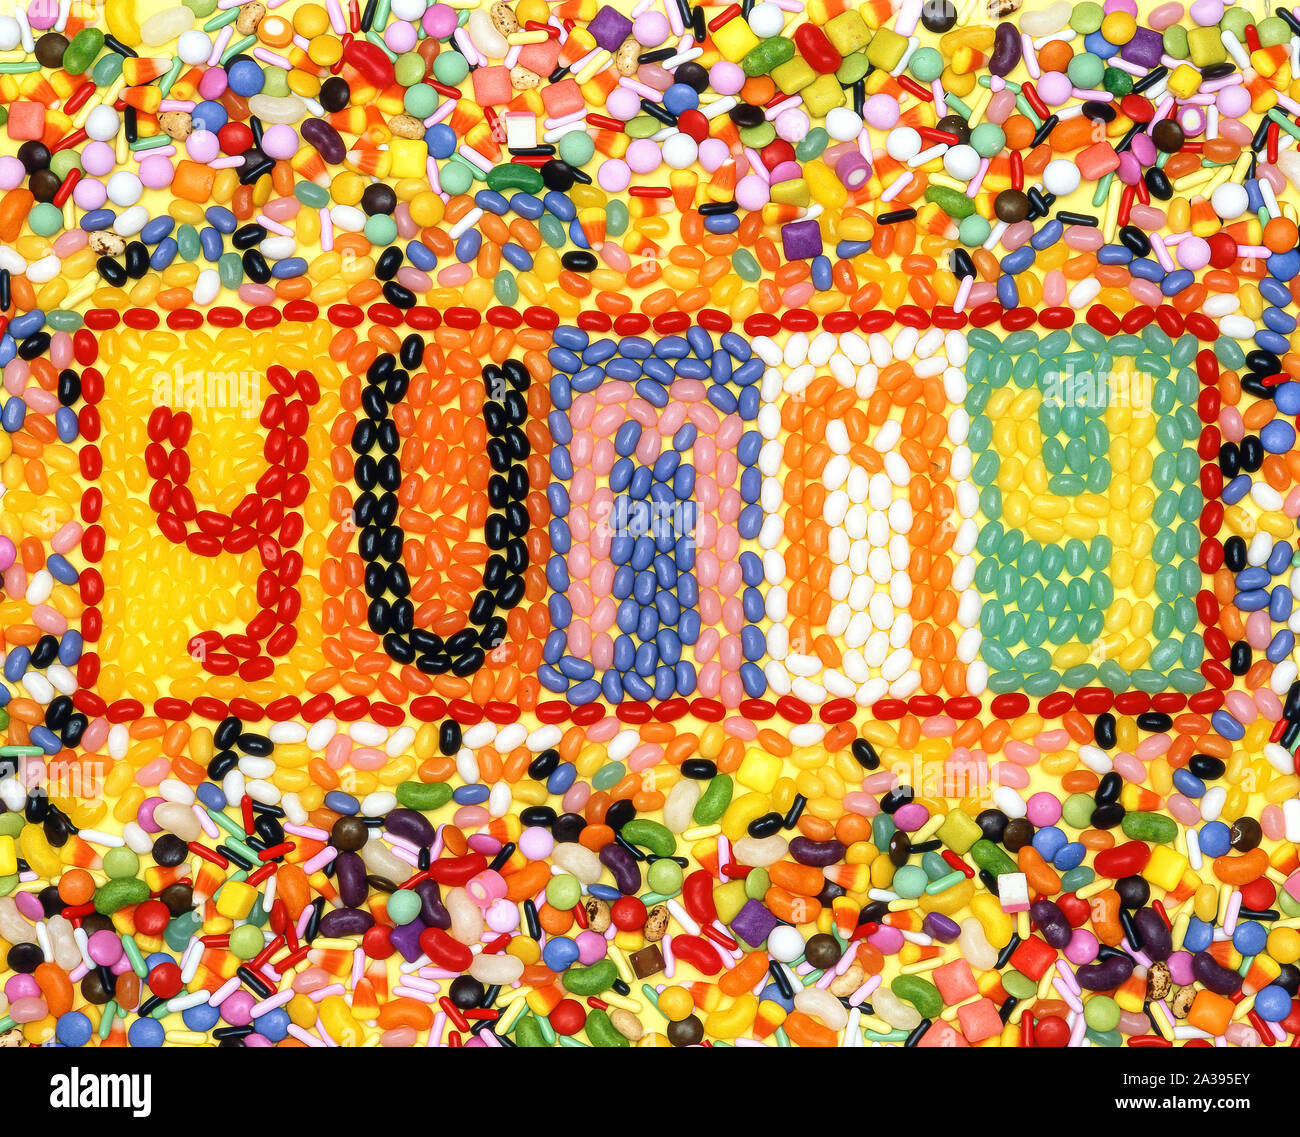 "Yummy" Jelly Beans y otros dulces display, Greater London, England, Reino Unido Foto de stock